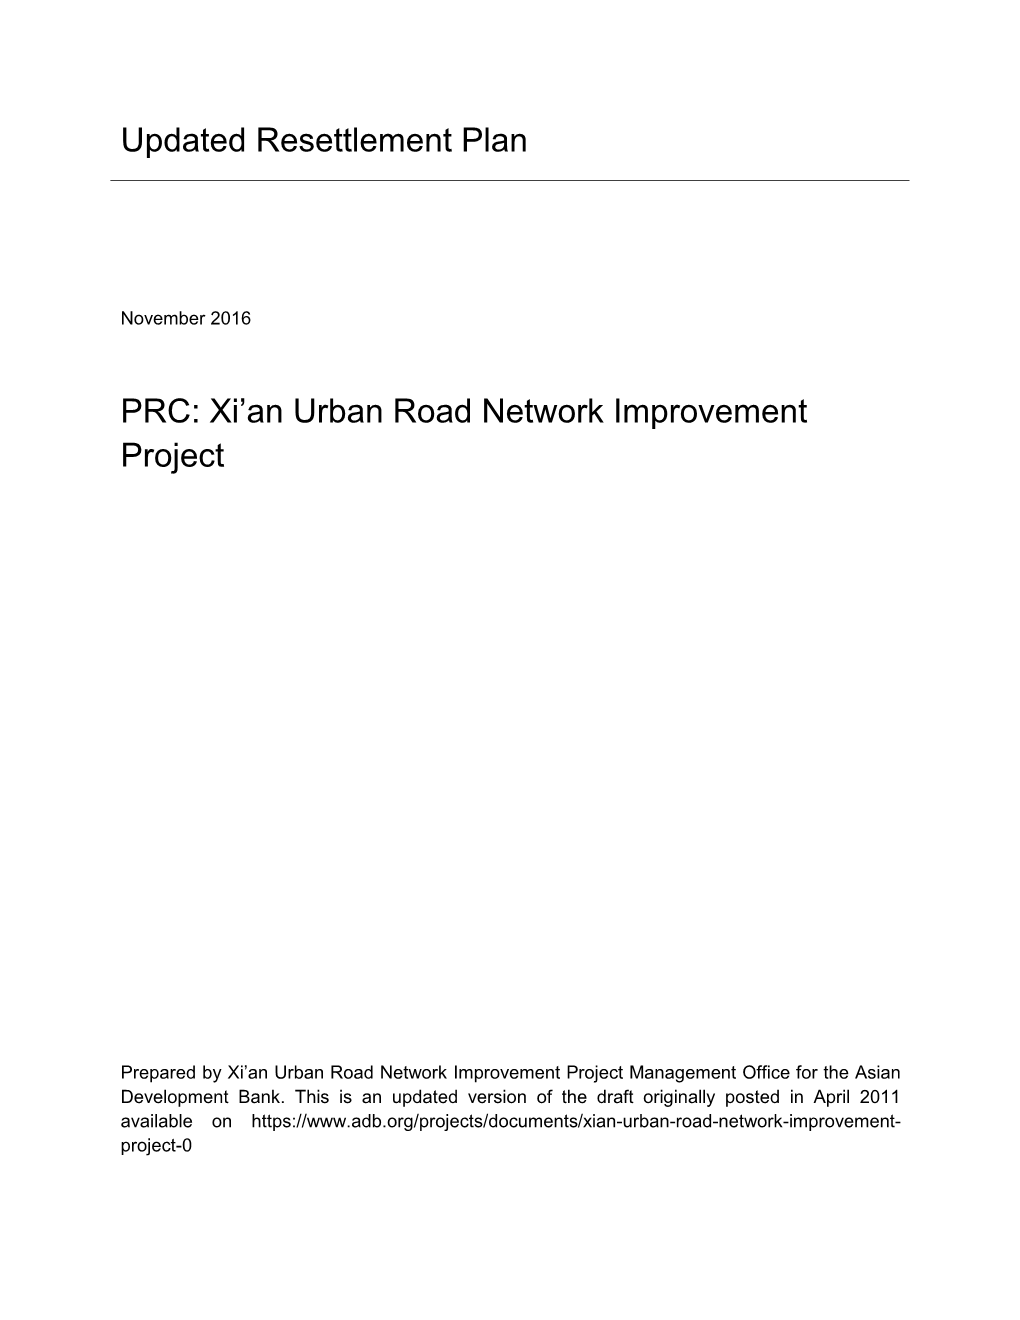 Xi'an Urban Road Network Improvement Project